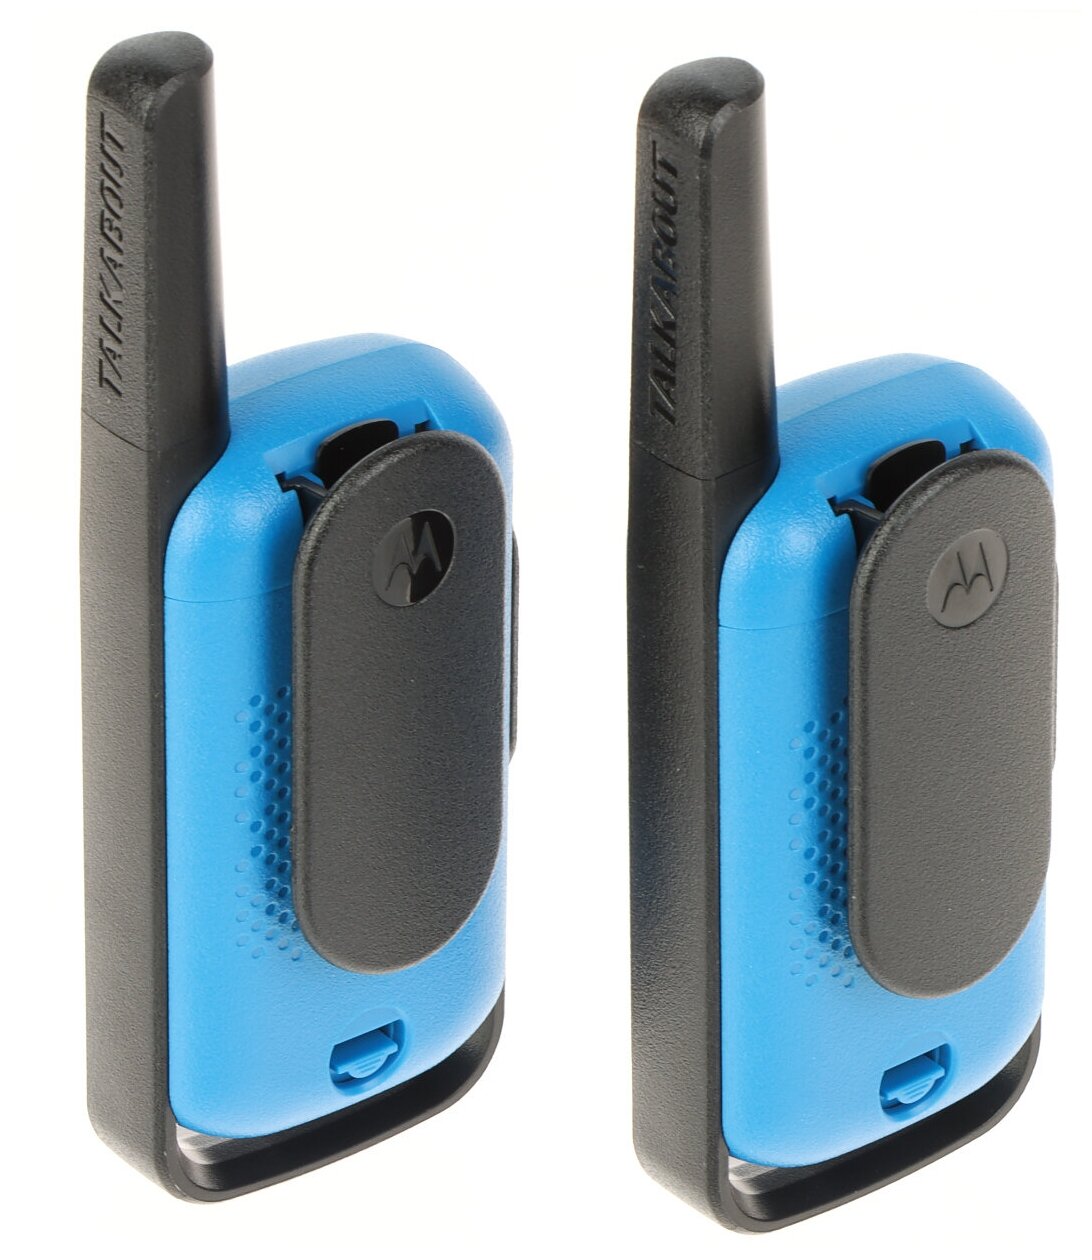 Motorola Комплект из двух радиостанций Talkabout T42 BLUE B4P00811LDKMAW